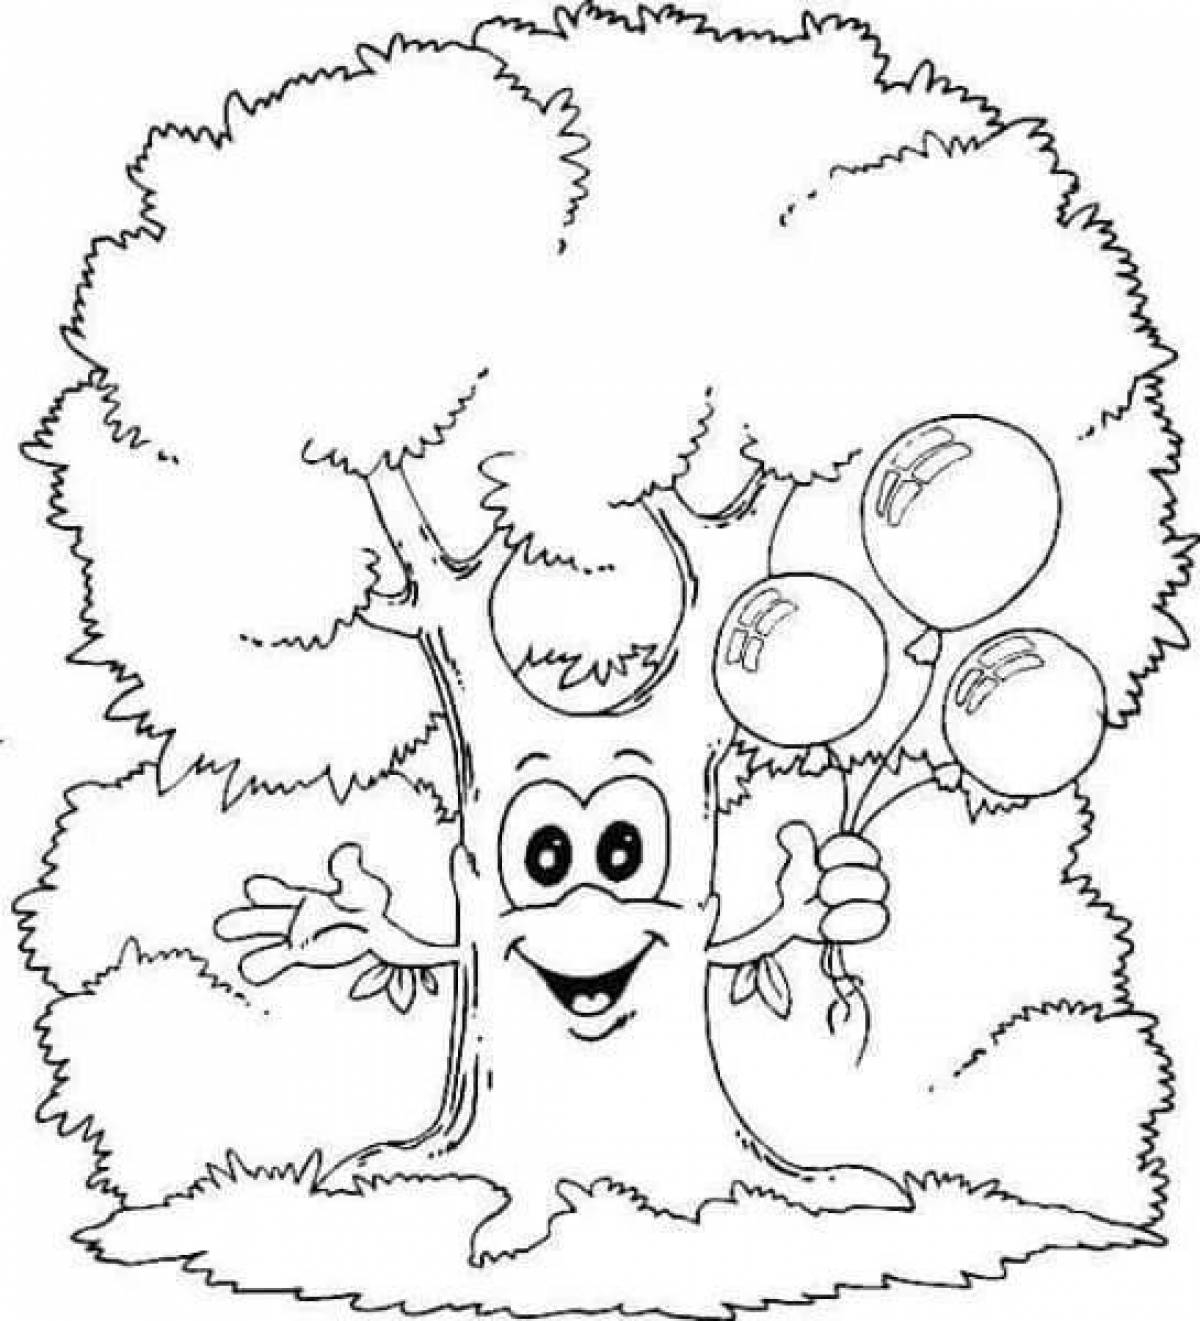 Joyful family tree coloring book